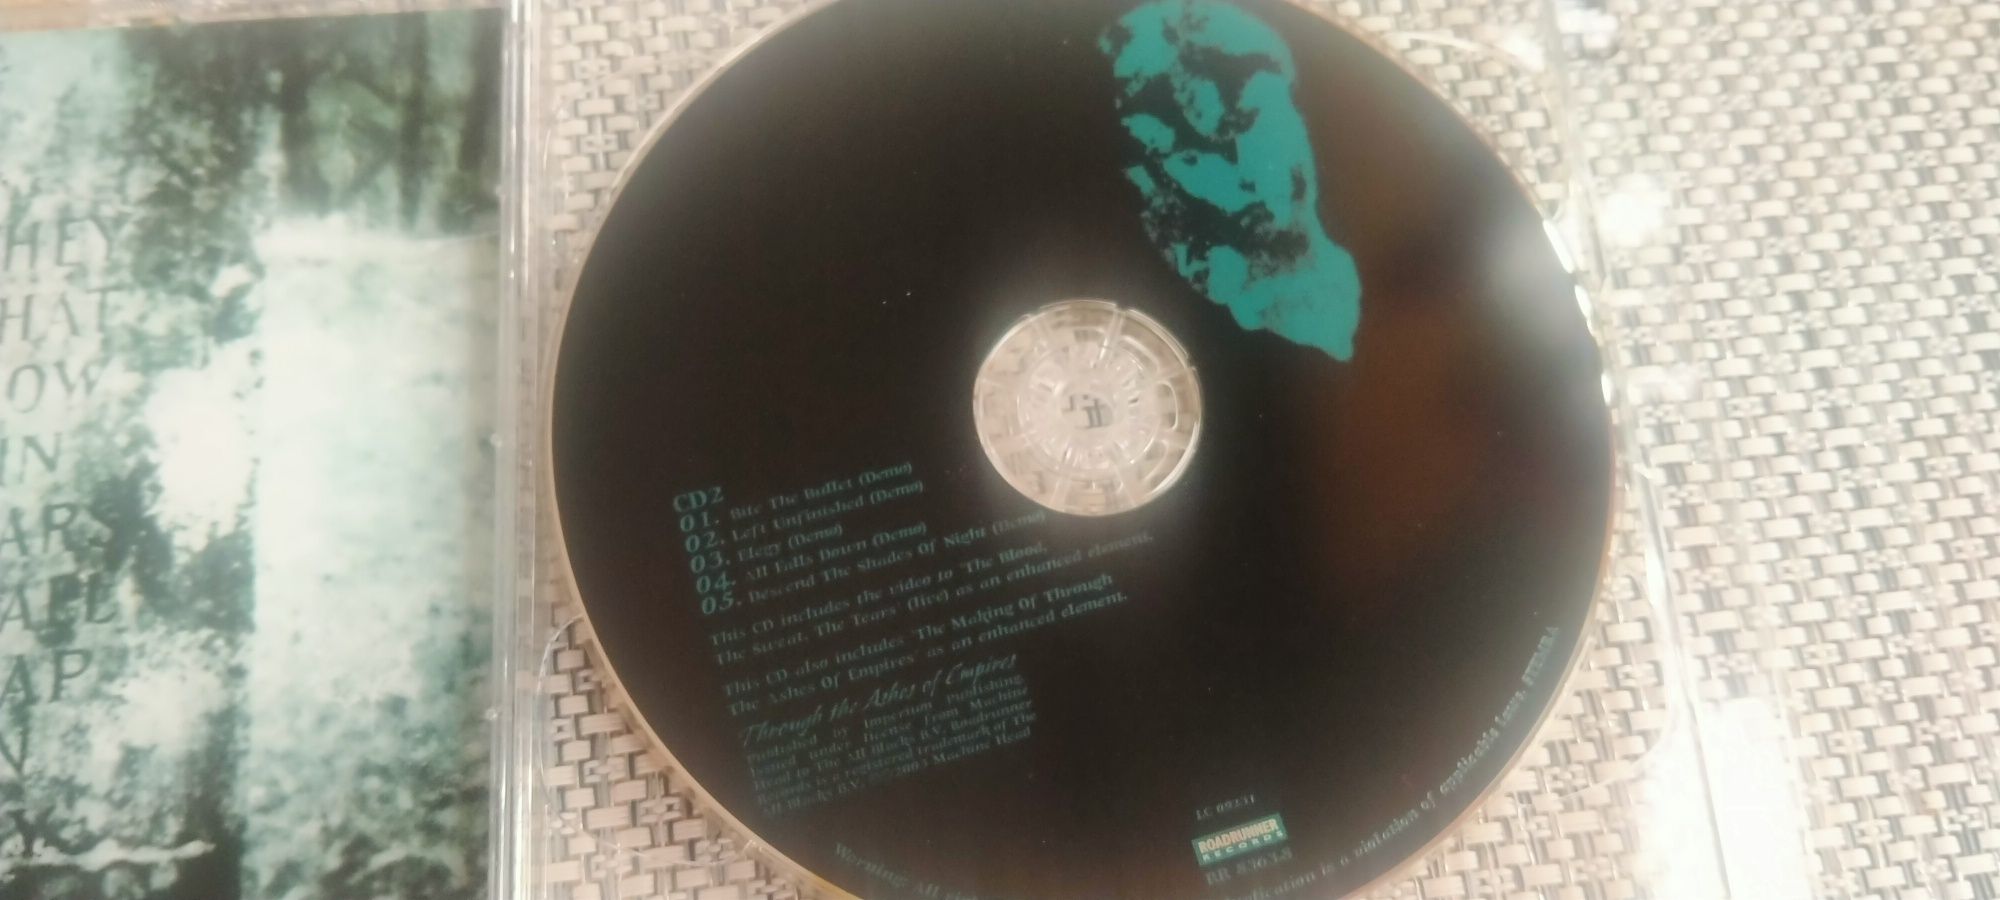 Płyta 2 CD machine head limited edition through the ashes